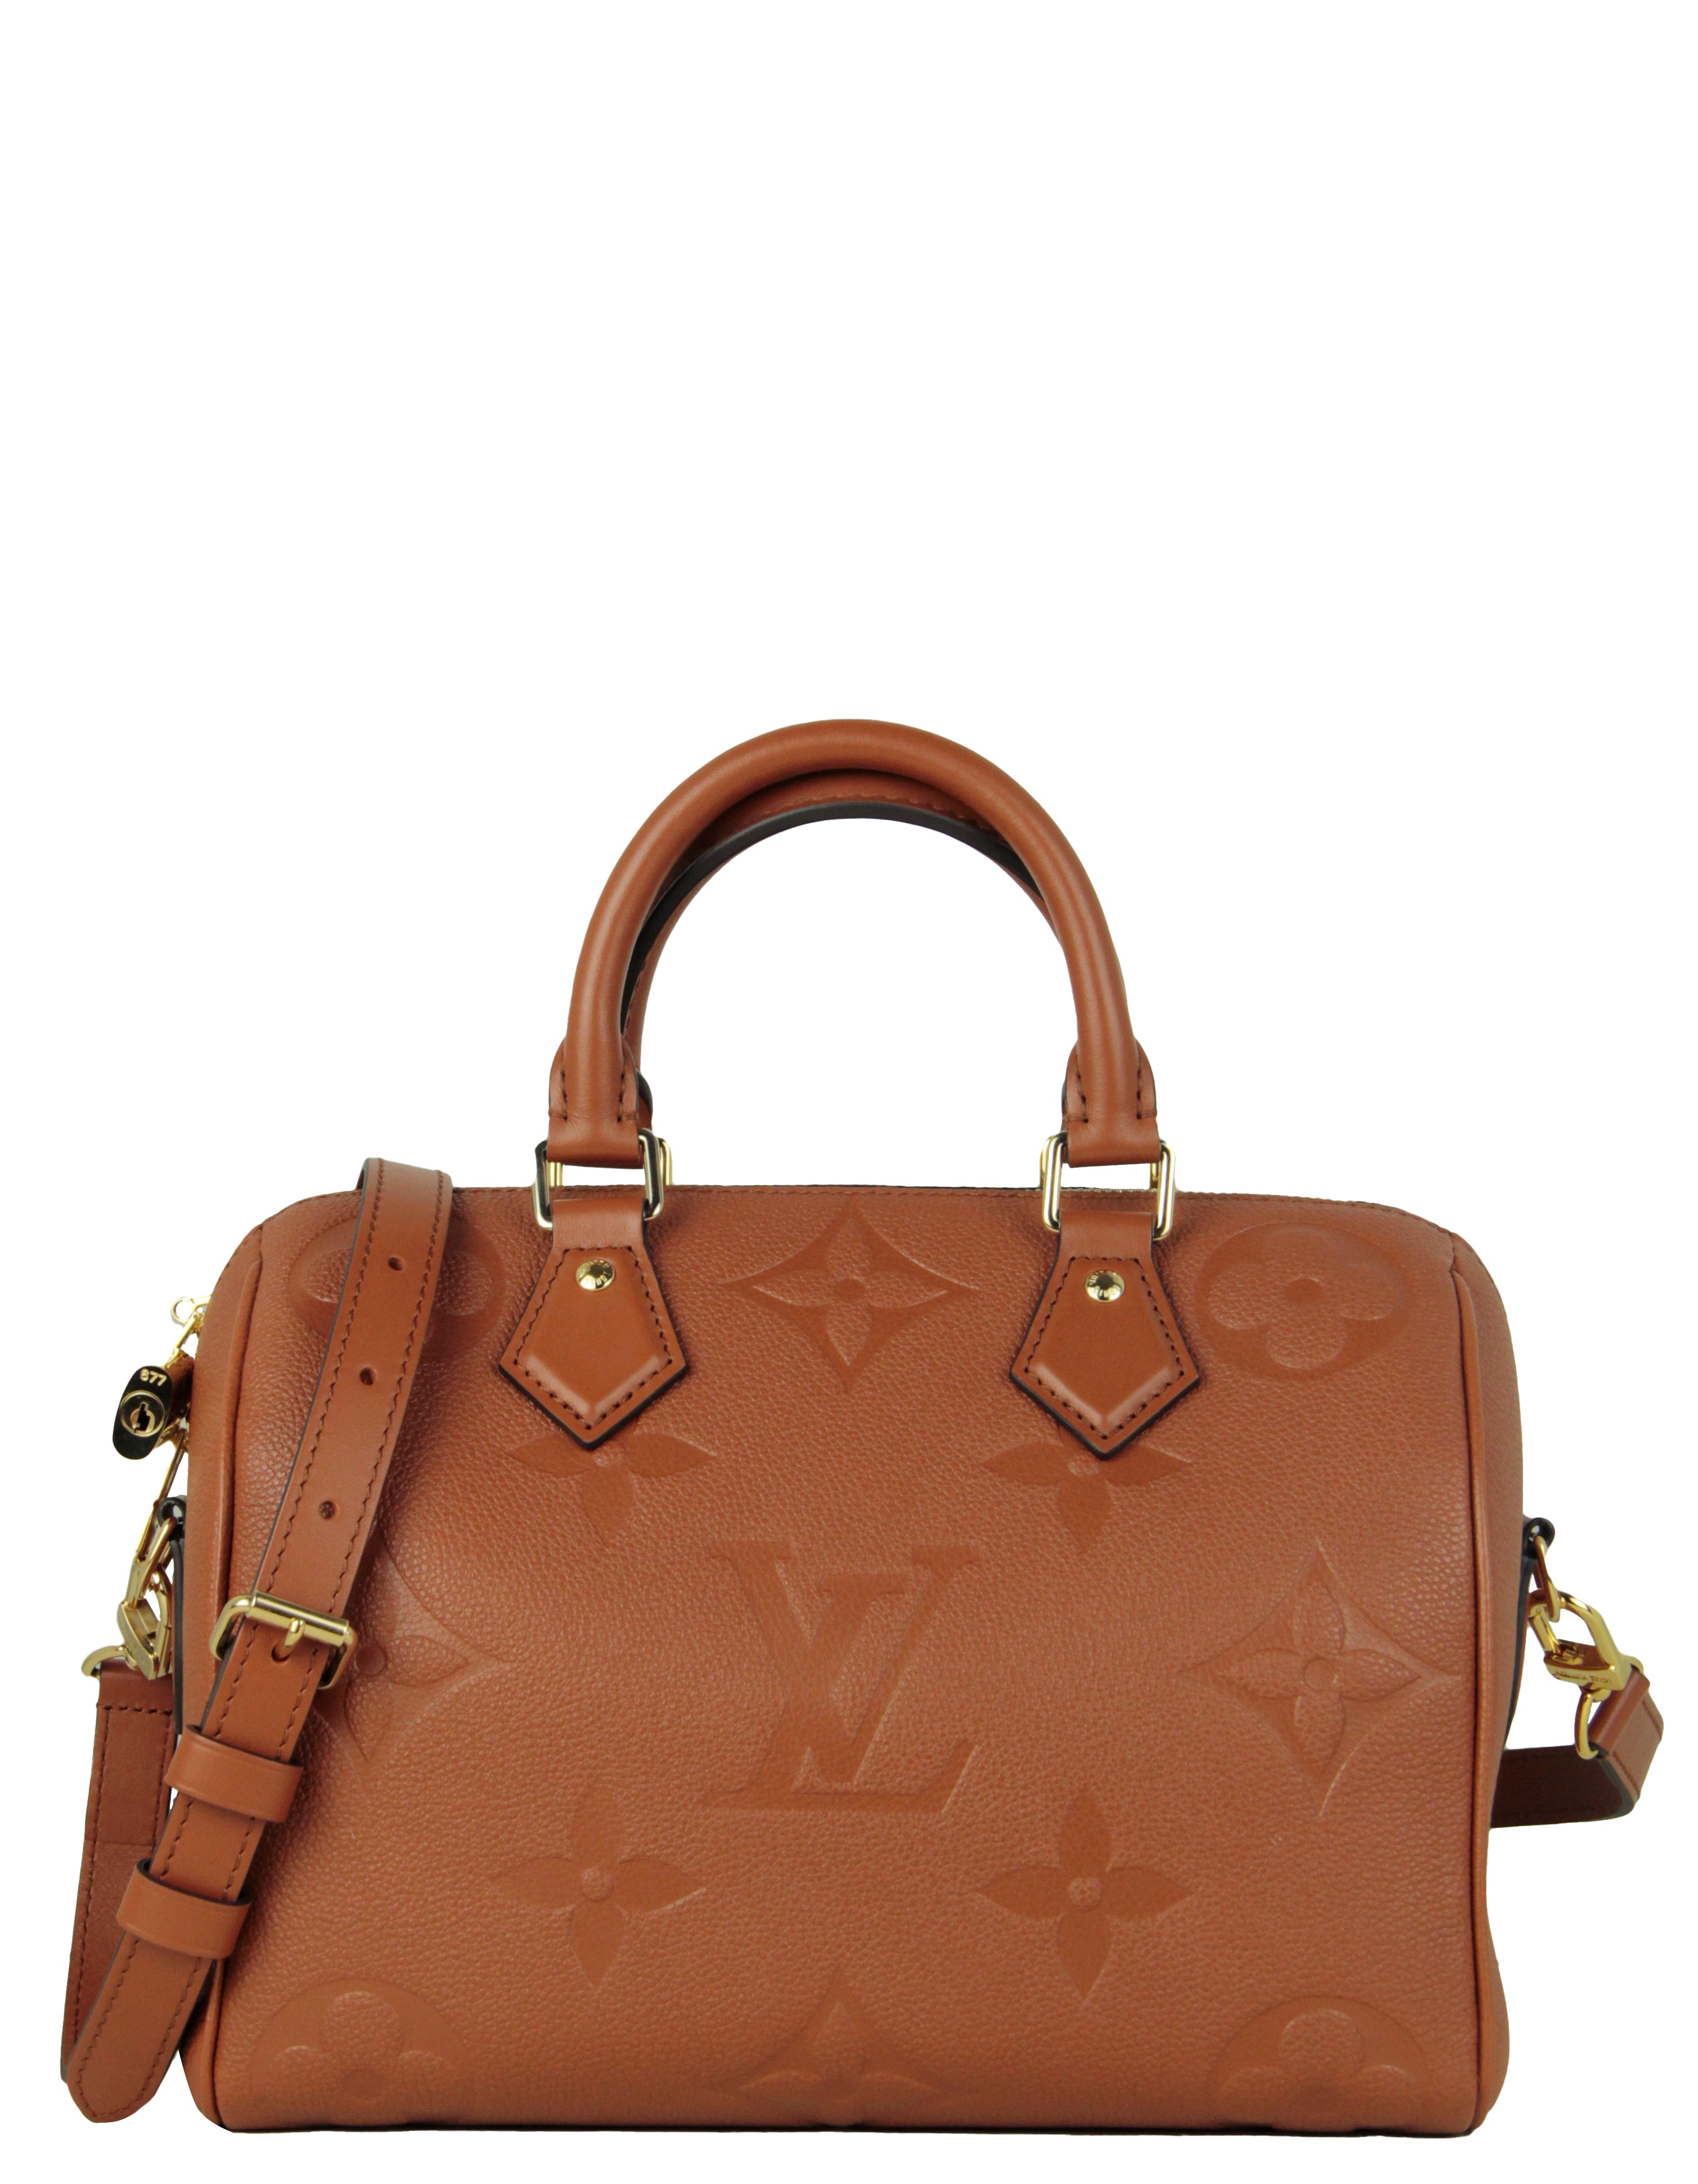 VERY USED Louis Vuitton Speedy Bandouliere 25 Brown Monogram